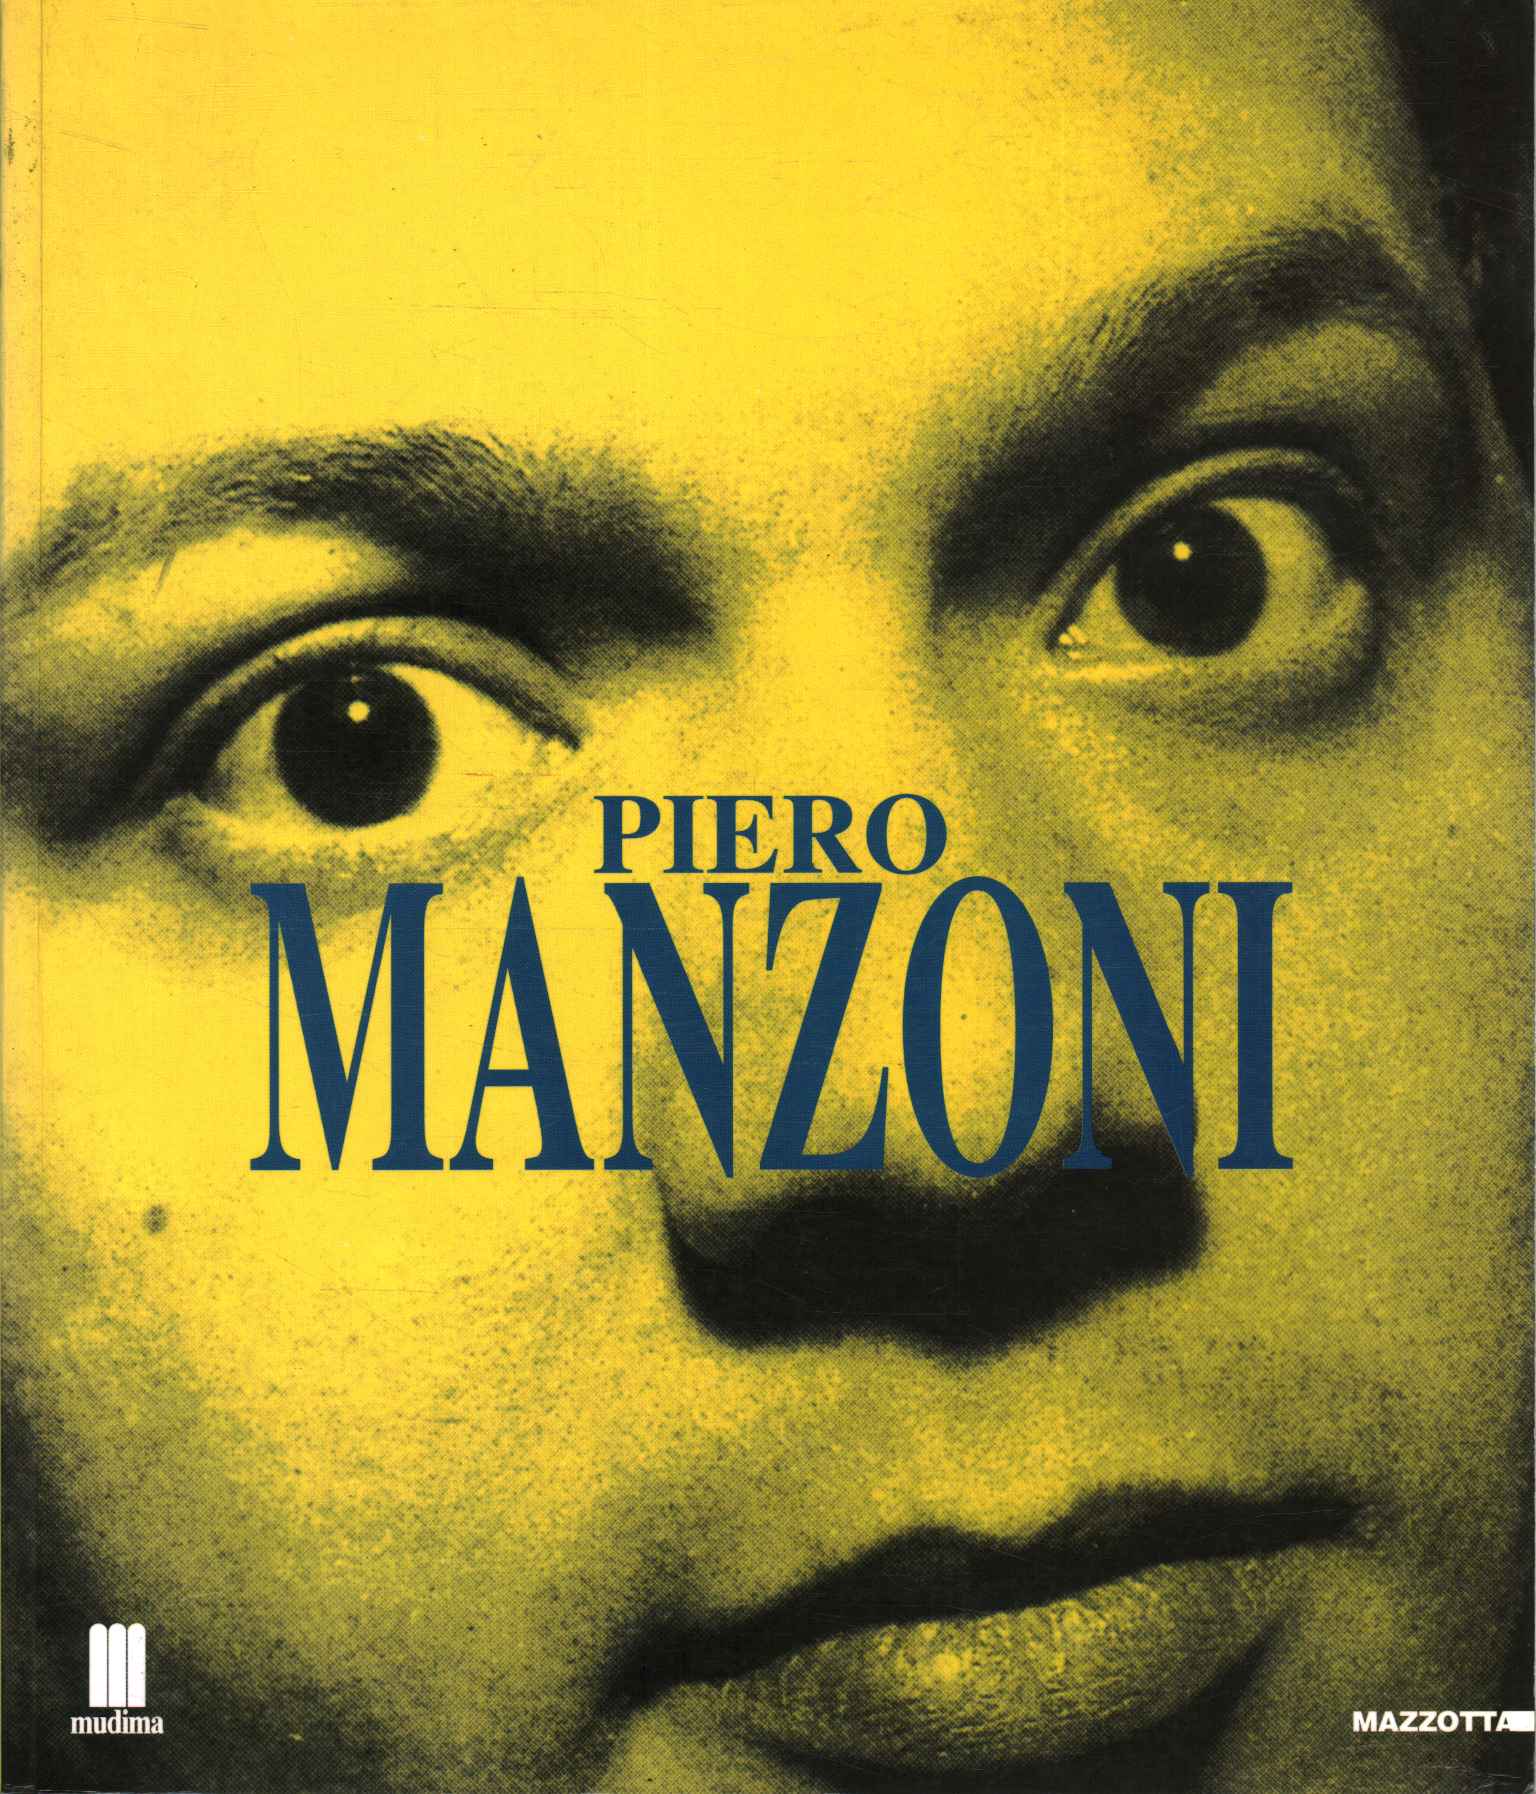 Piero Manzoni. Milan et la mythologie